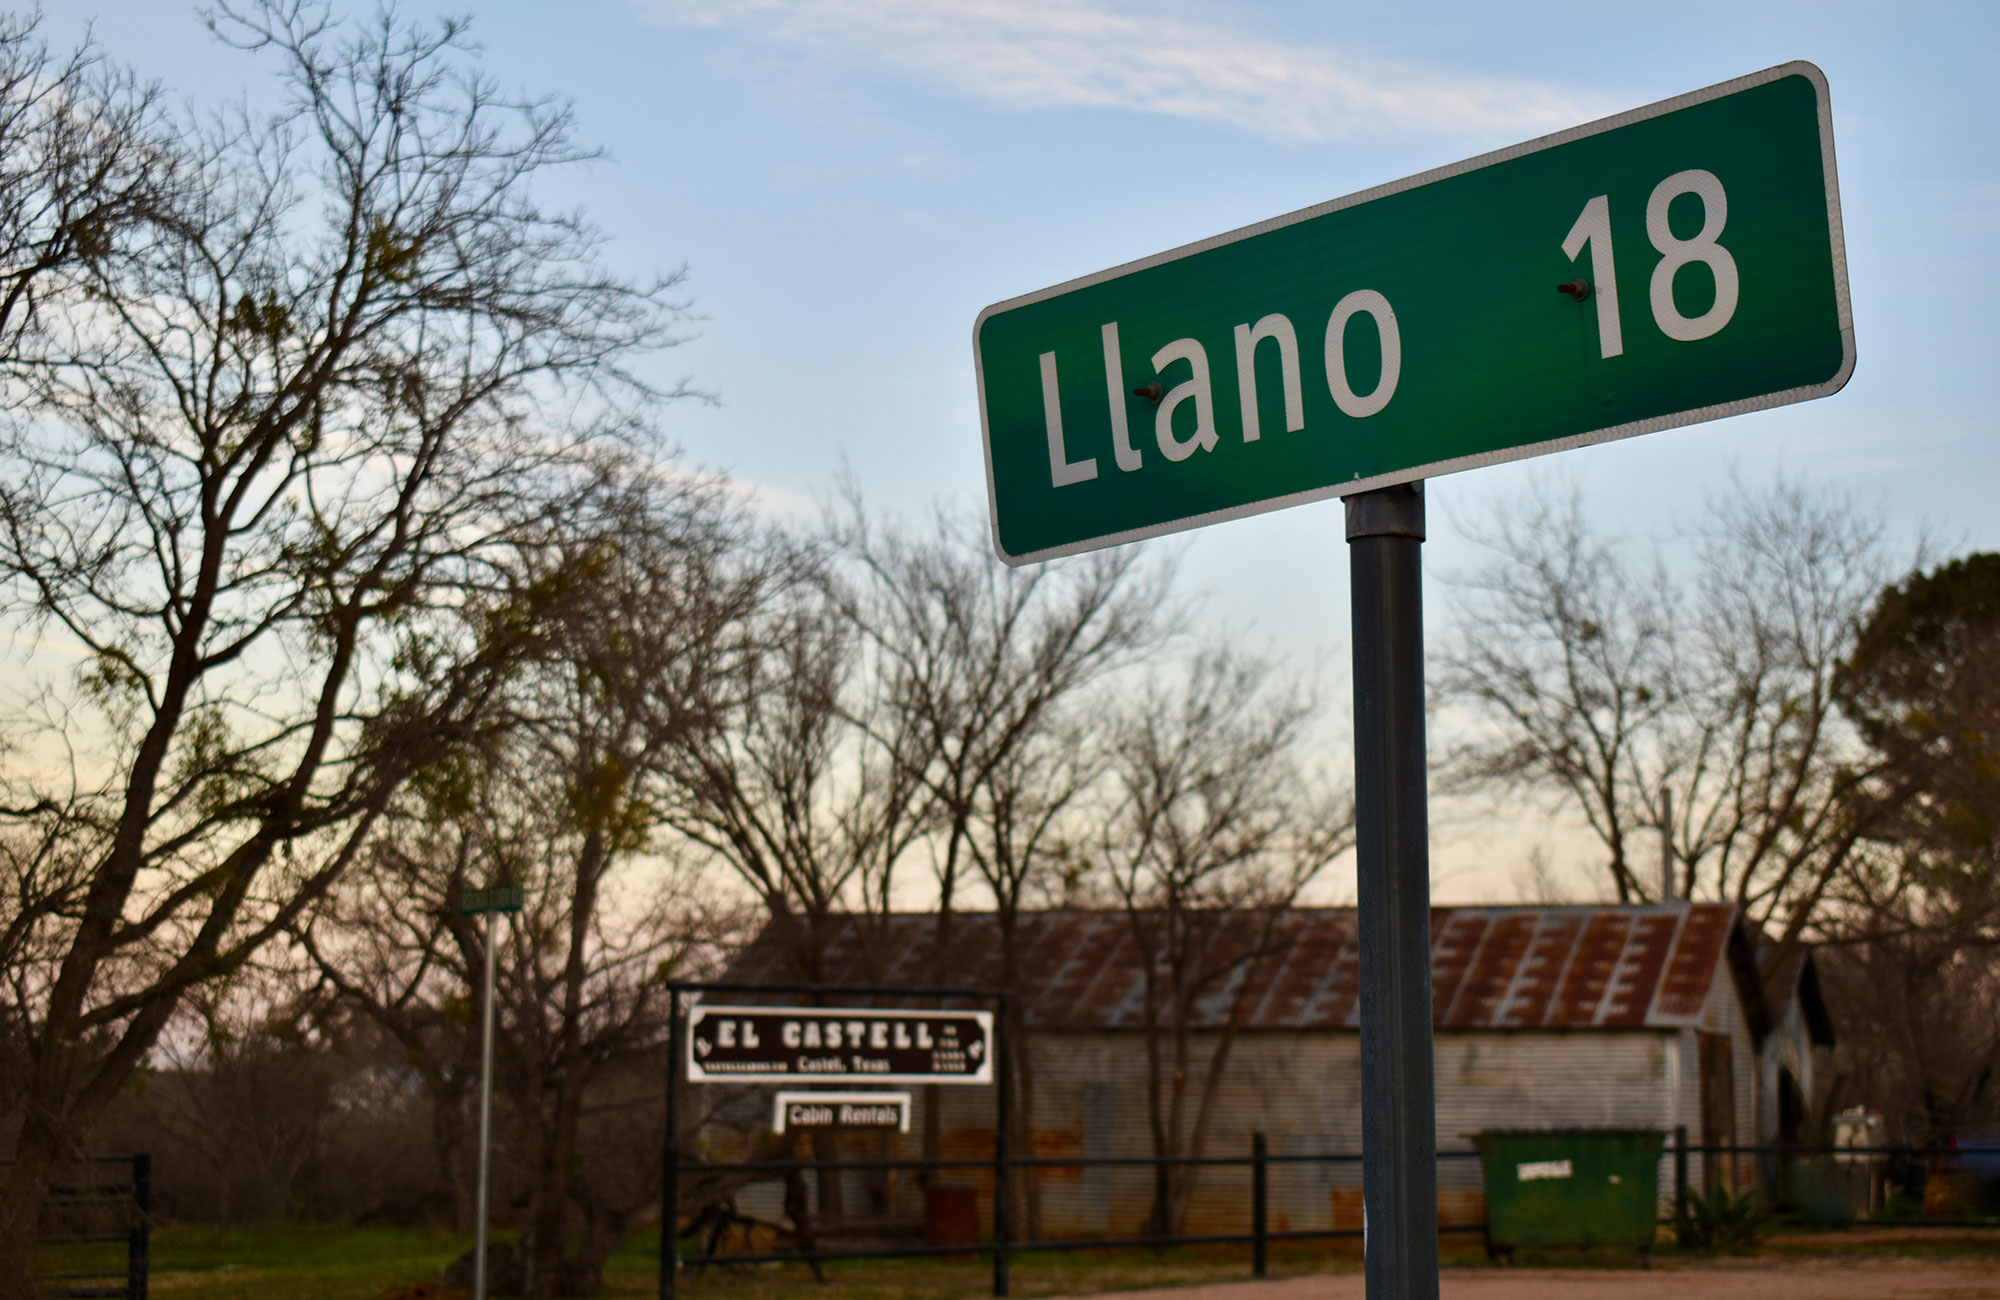 The Town of Llano, Texas